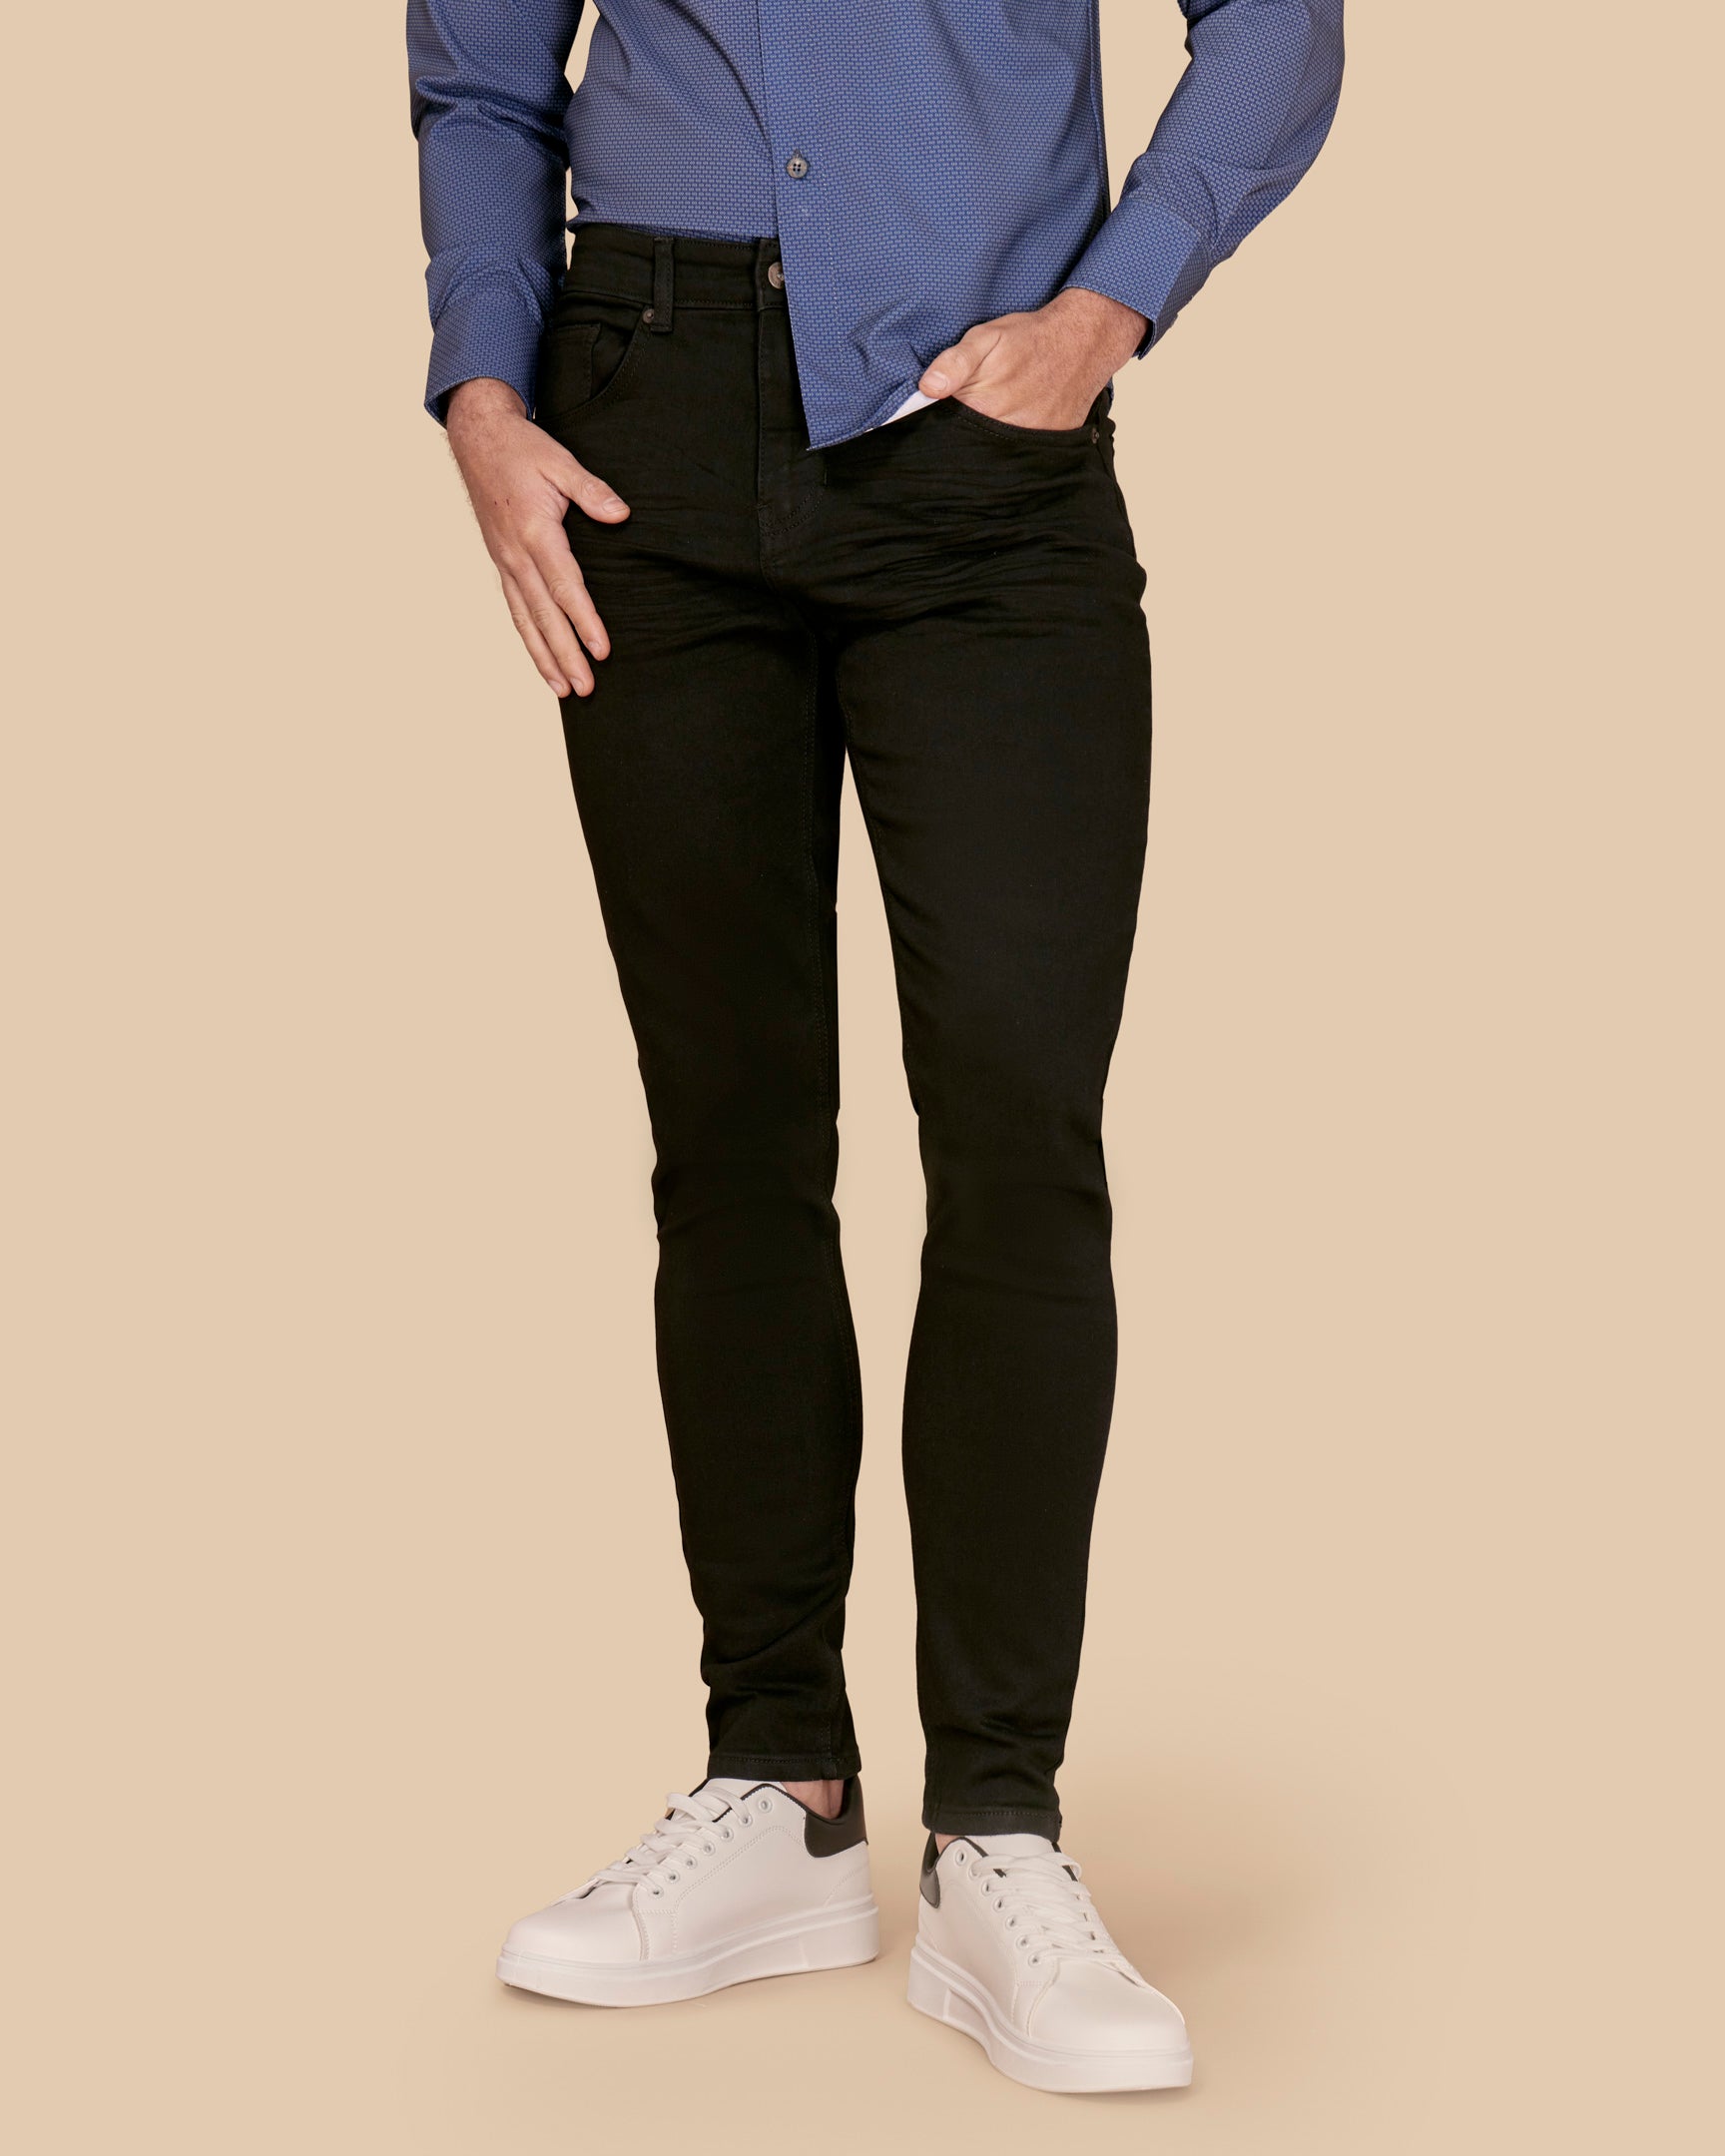 Jeans slim fit elastizado 507